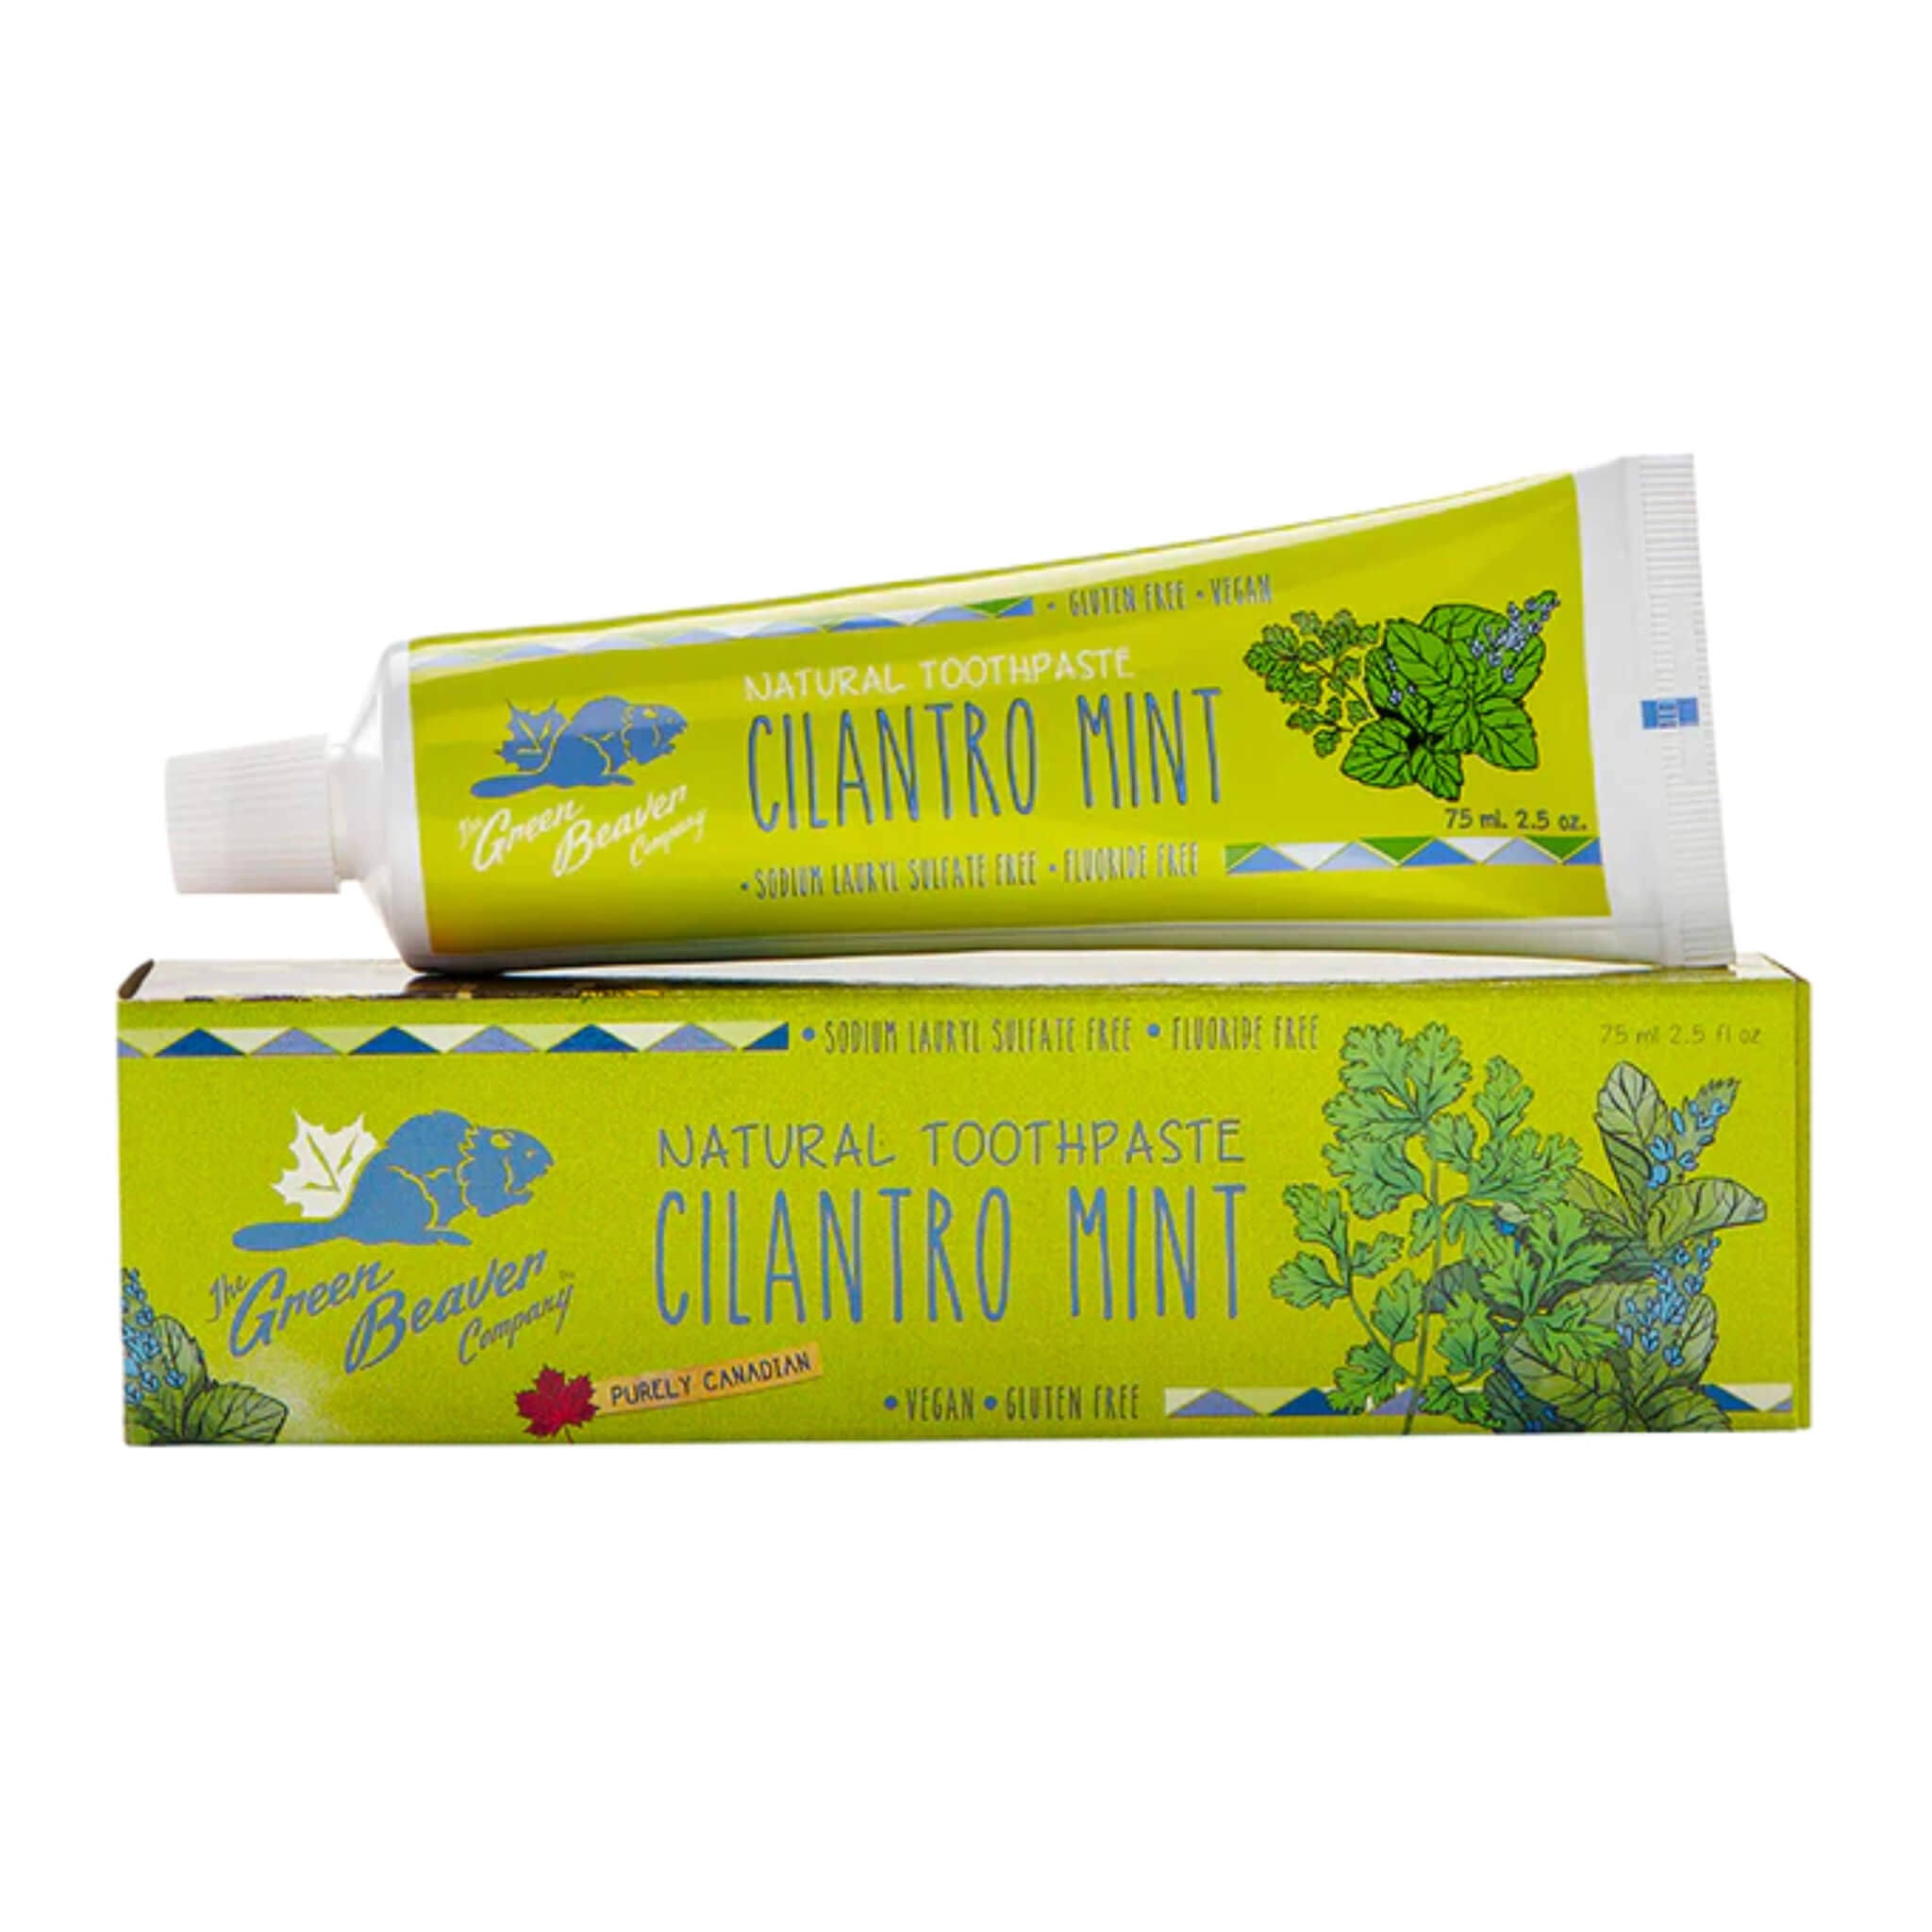 Green Beaver Natural Toothpaste - Cilantro Mint, 2.5oz